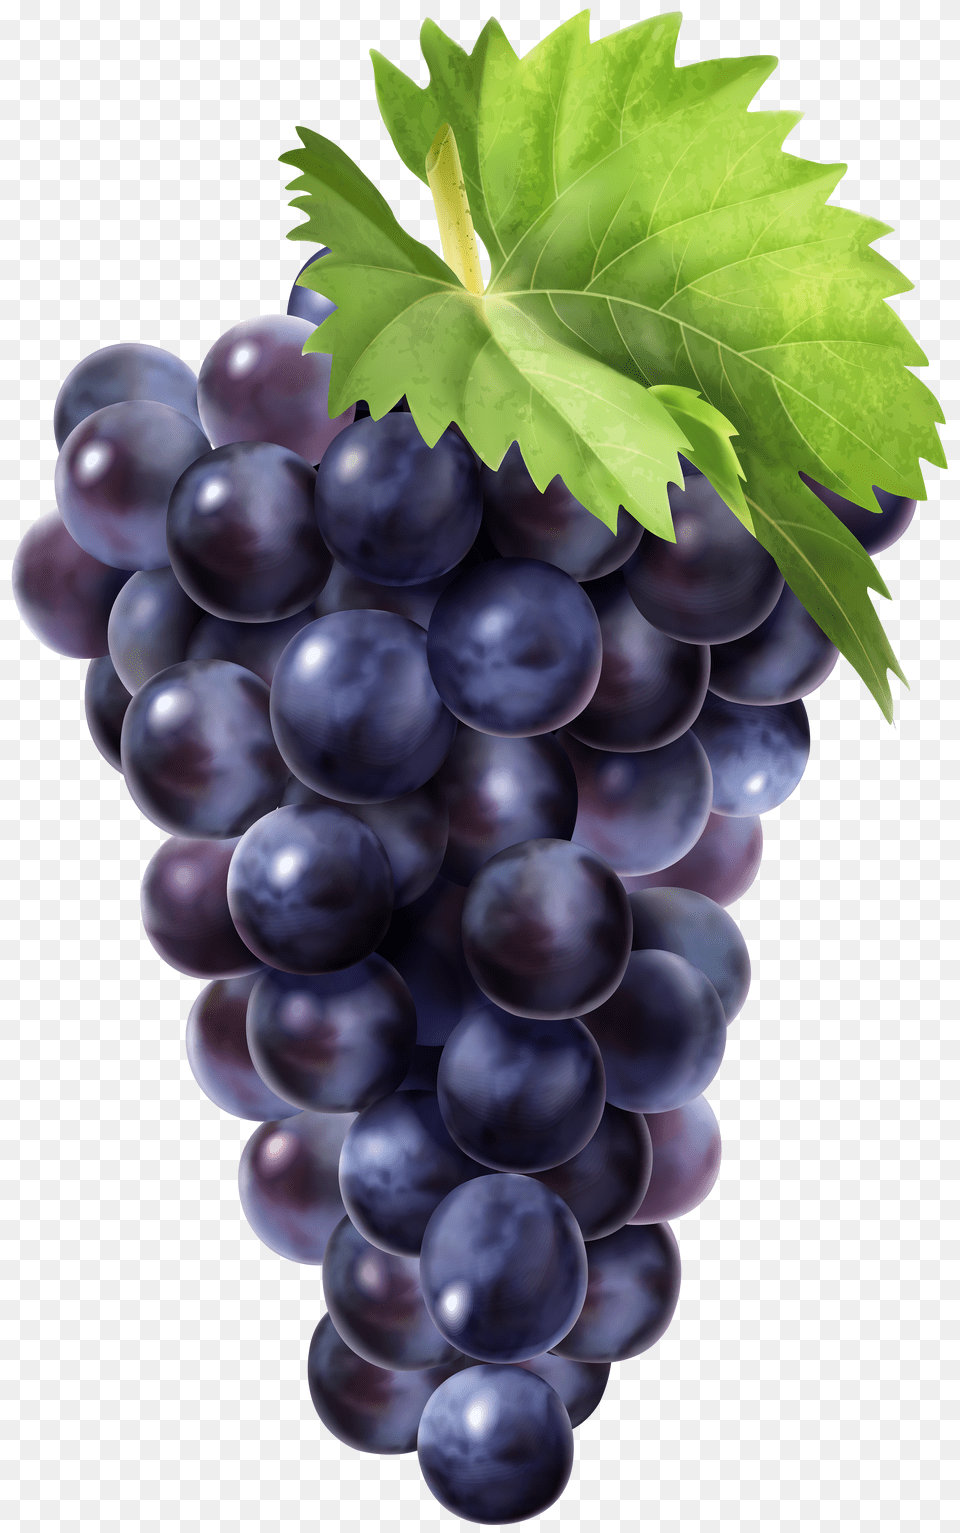 Black Grapes Clip Art Grapes Png Image